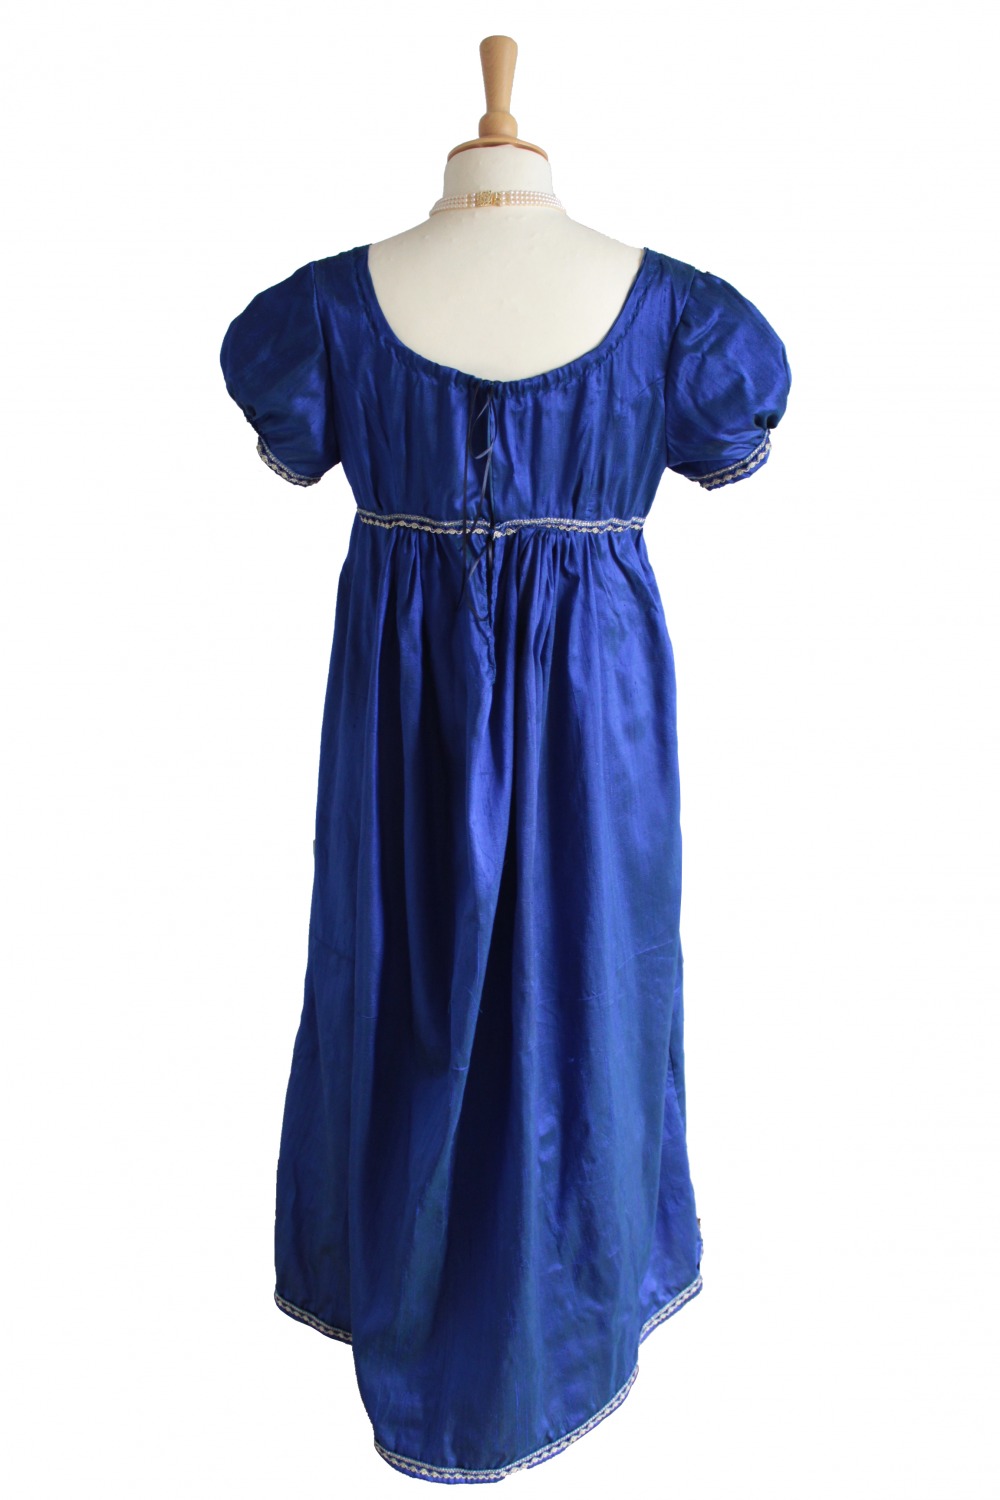 Ladies/ Older Girl's 19th Century Petite Jane Austen Regency Day Gown Costume Size 10 - 12 Image